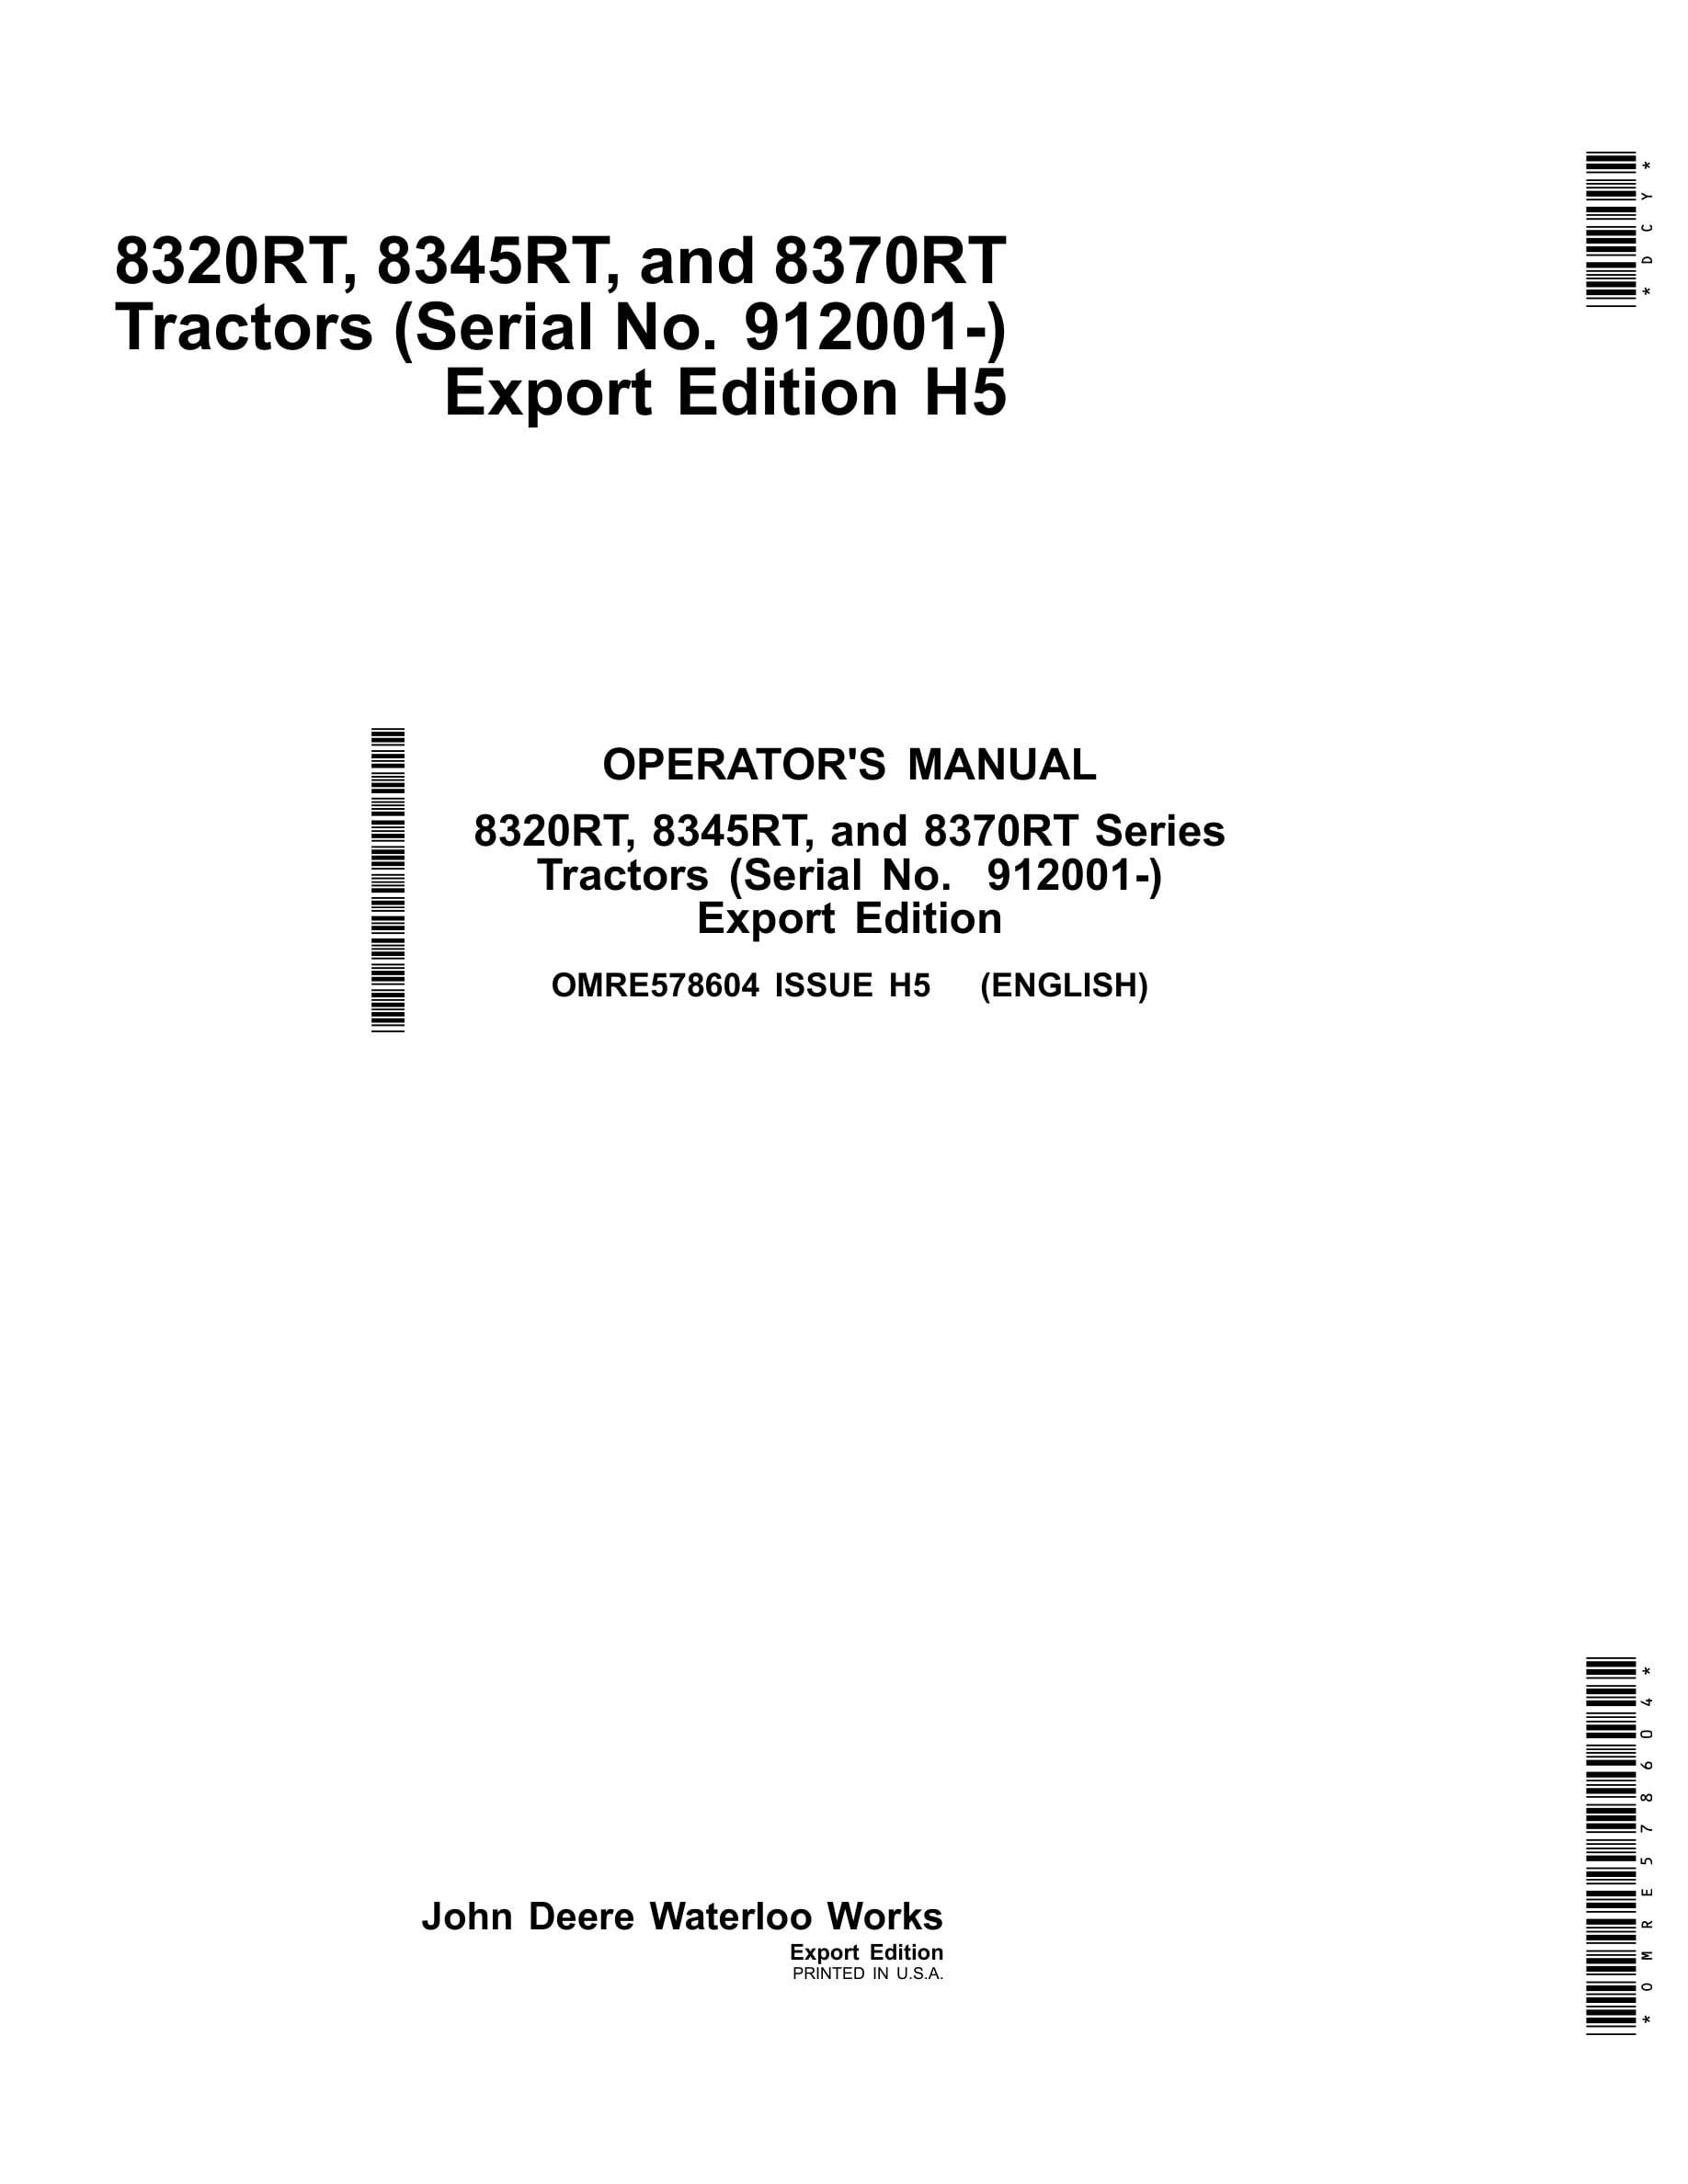 John Deere 8320rt, 8345rt, And 8370rt Series Tractors Operator Manuals OMRE578604-1